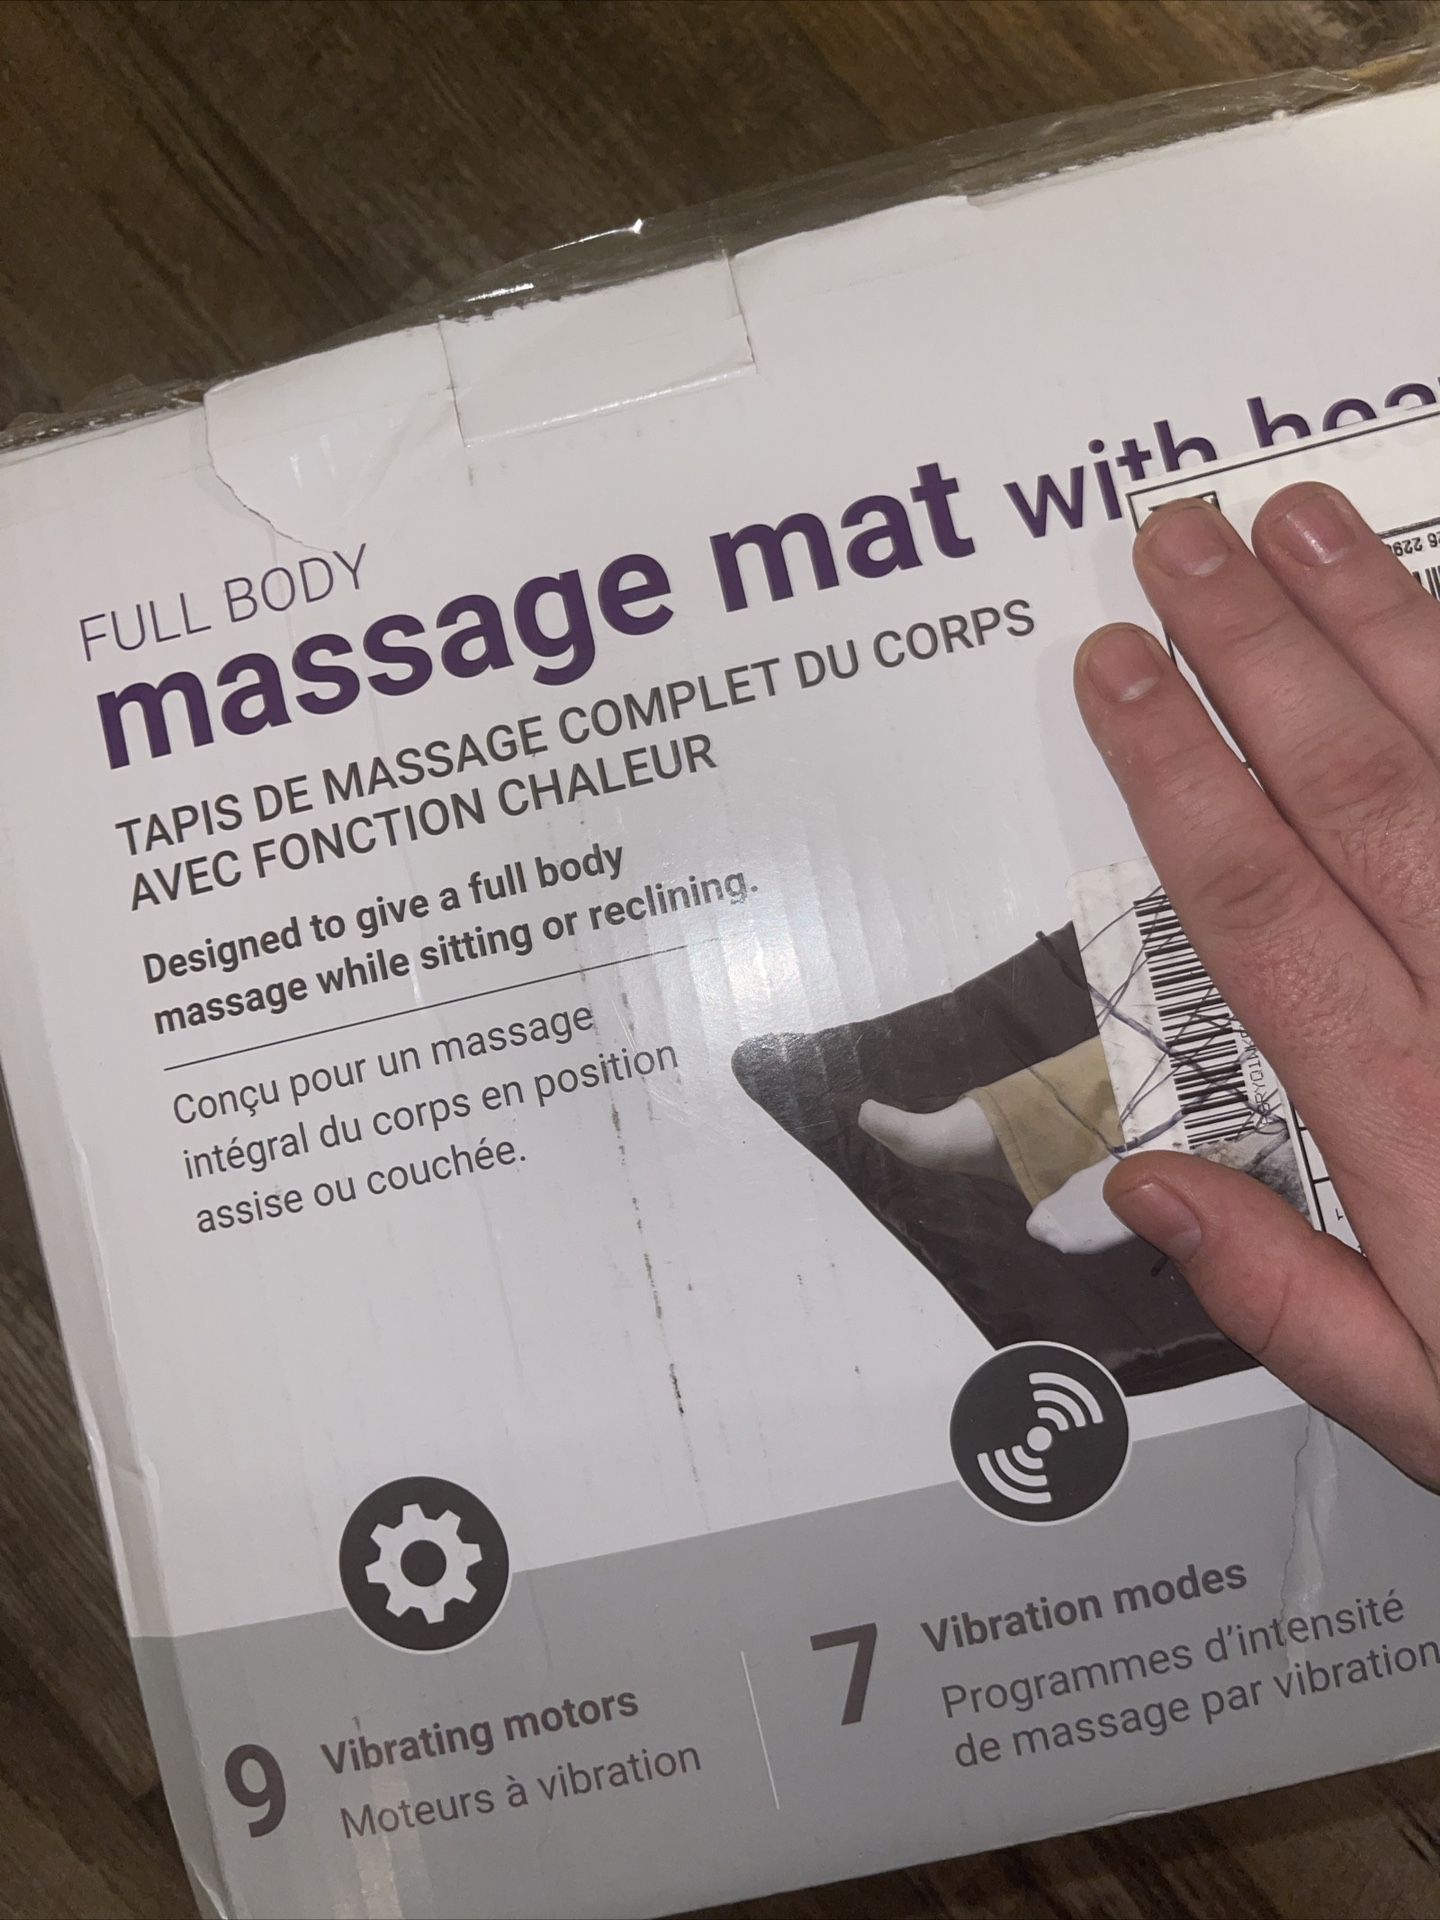 Heated Massage Mat